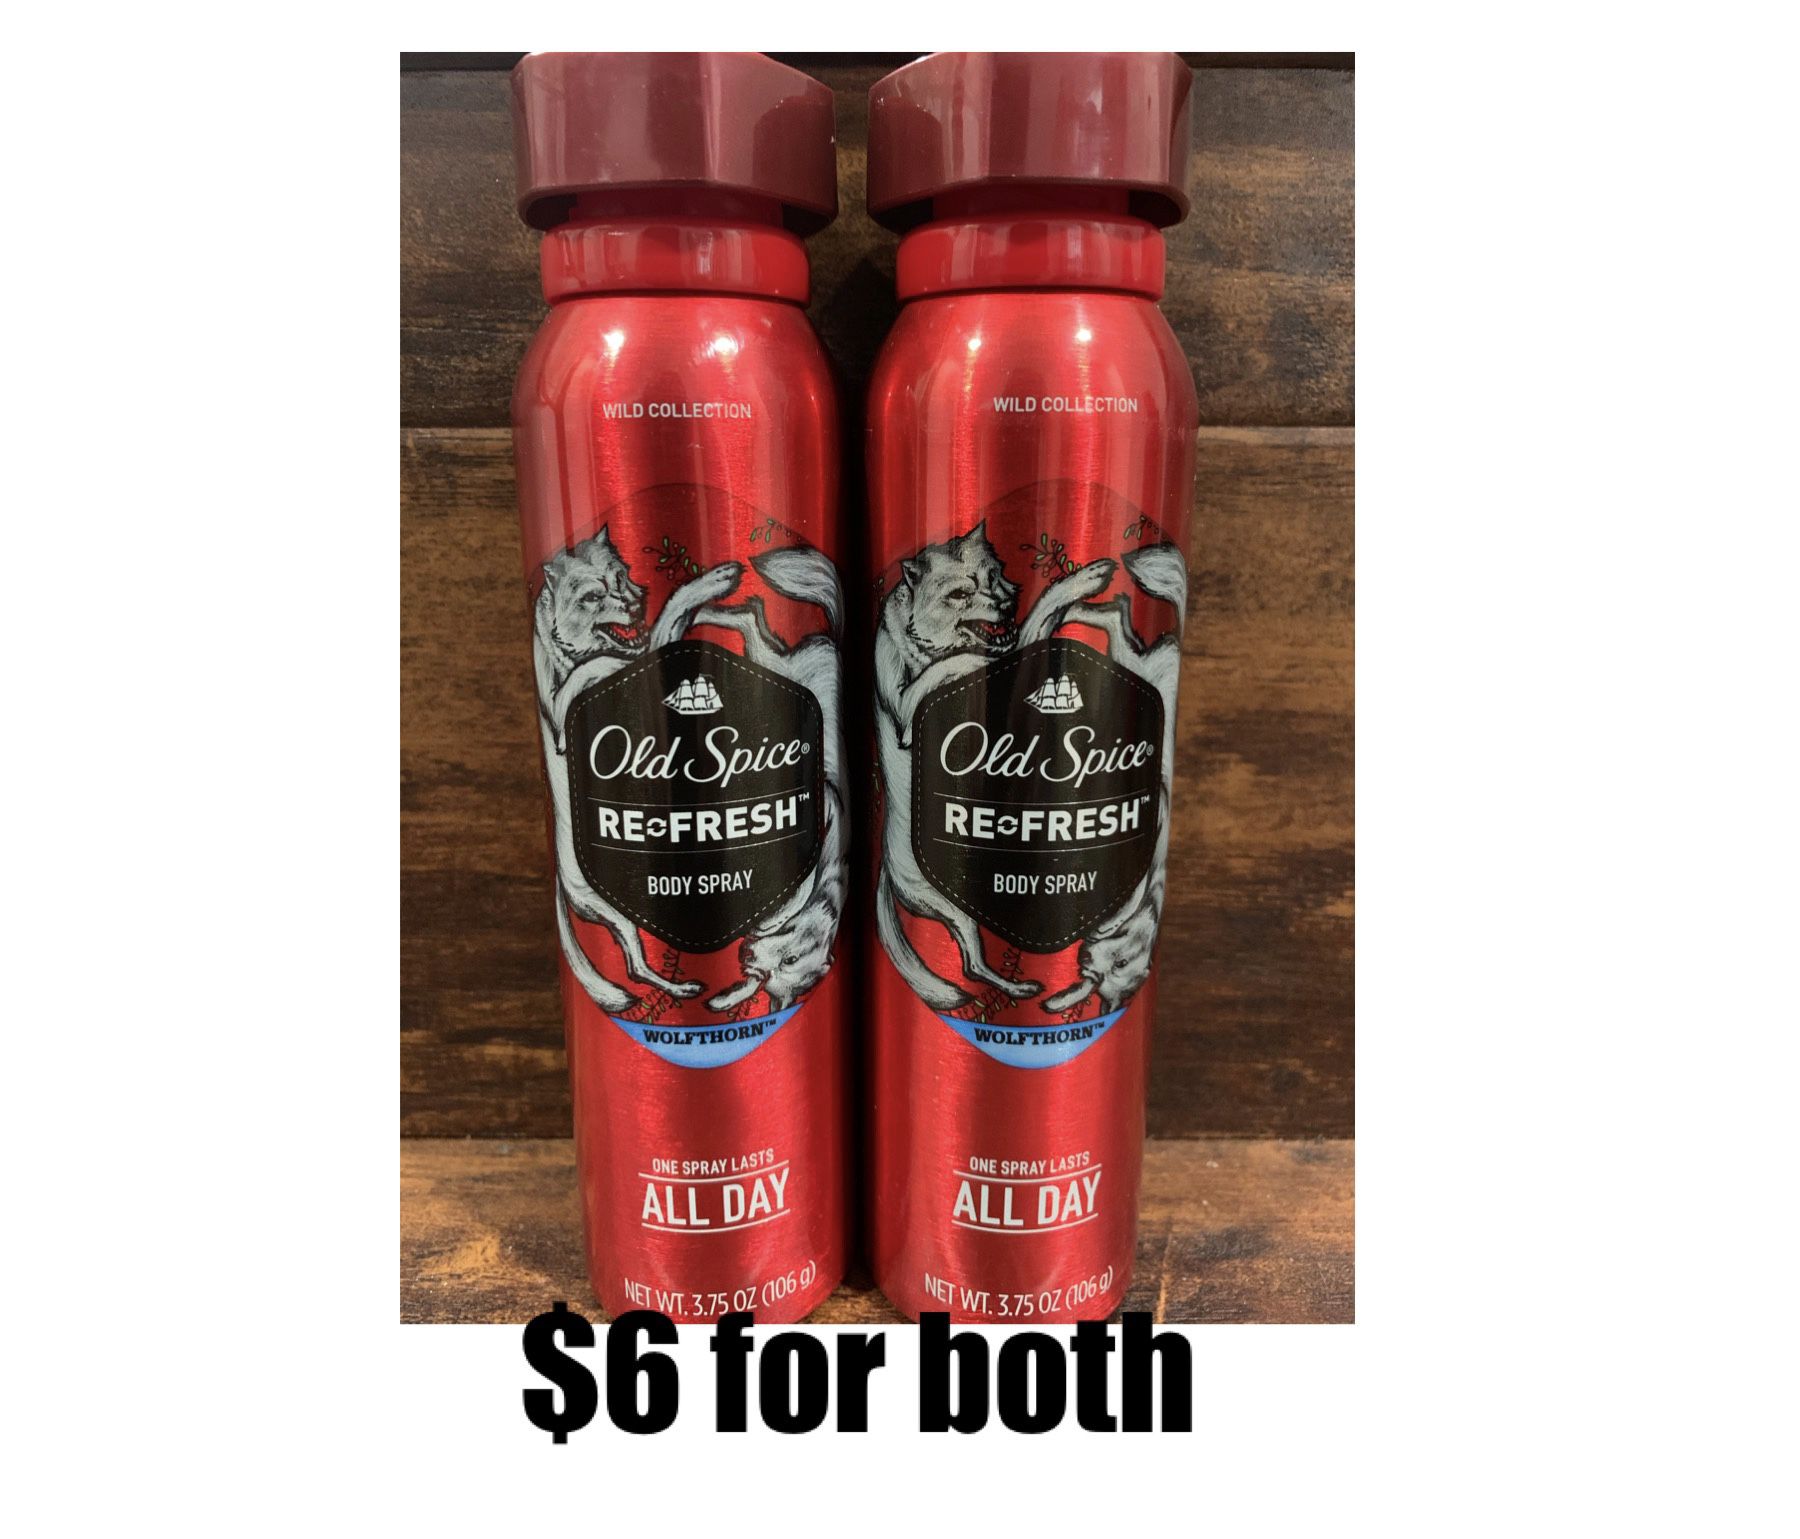 Old Spice Wild Wolfthorn Scent Body Spray for Men, 3.75 oz